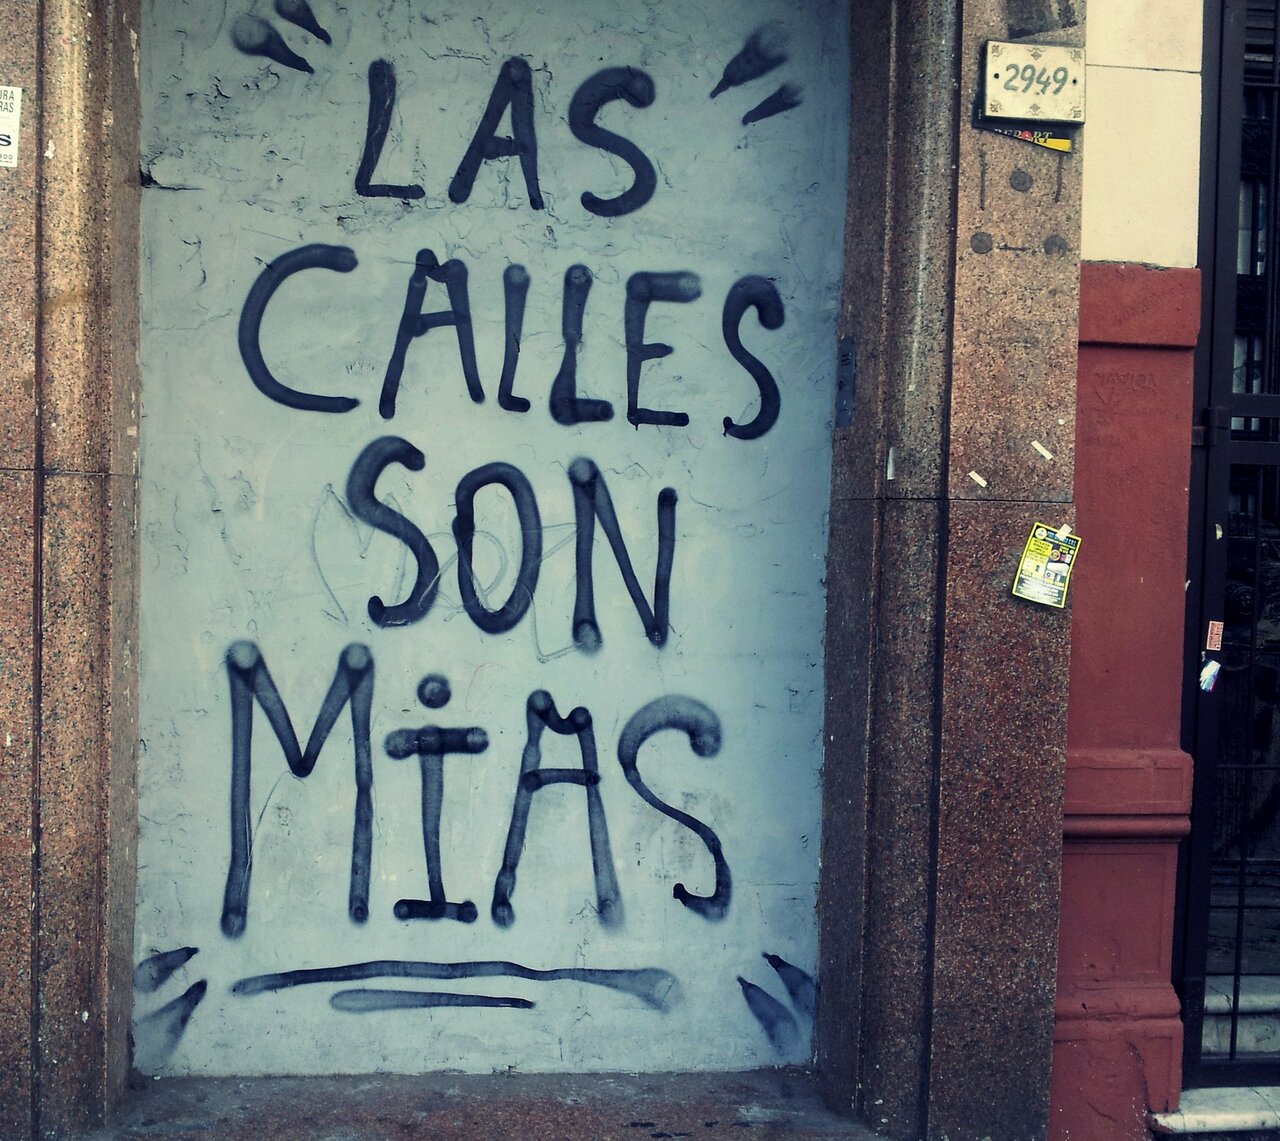 RT @patriciadamiano: Las calles son míasVisto en Baires http://factorfotos.blogspot.com/2016/11/las-calles-son-mias.html#graffiti https://t.co/TlBySgYddC